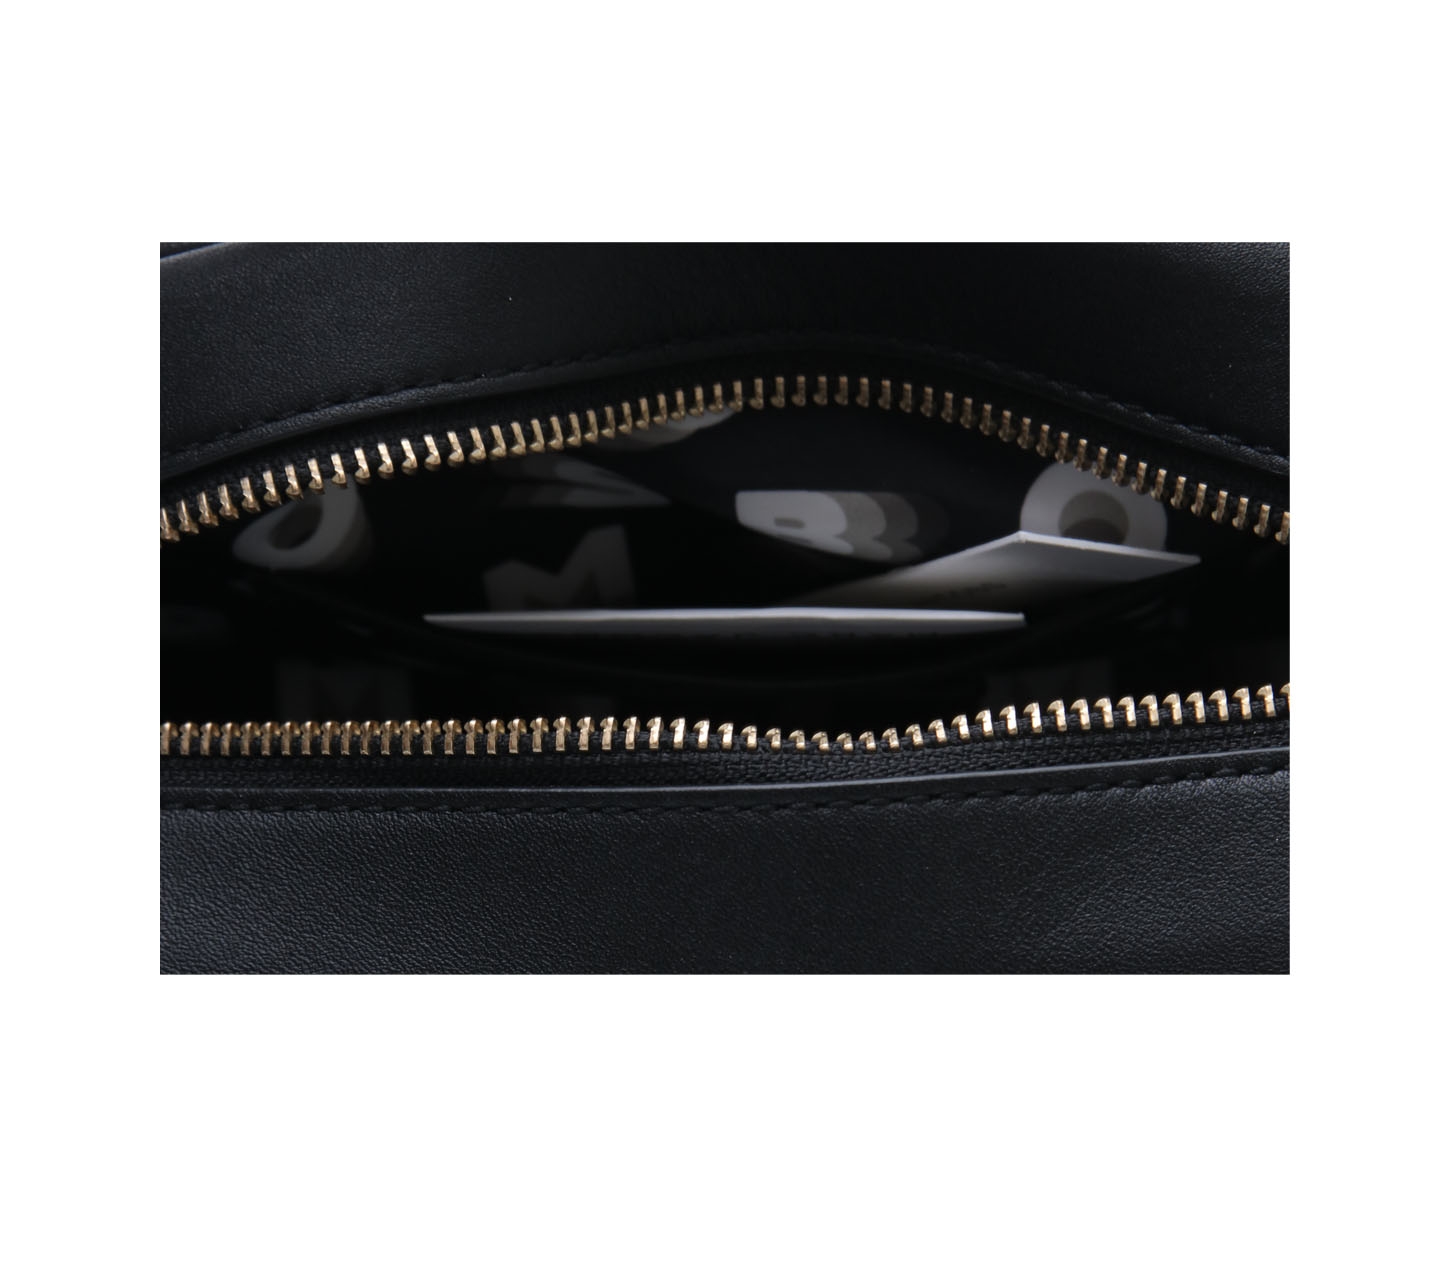 Marc jacobs Black Flash Top Zip Leather Sling Bag